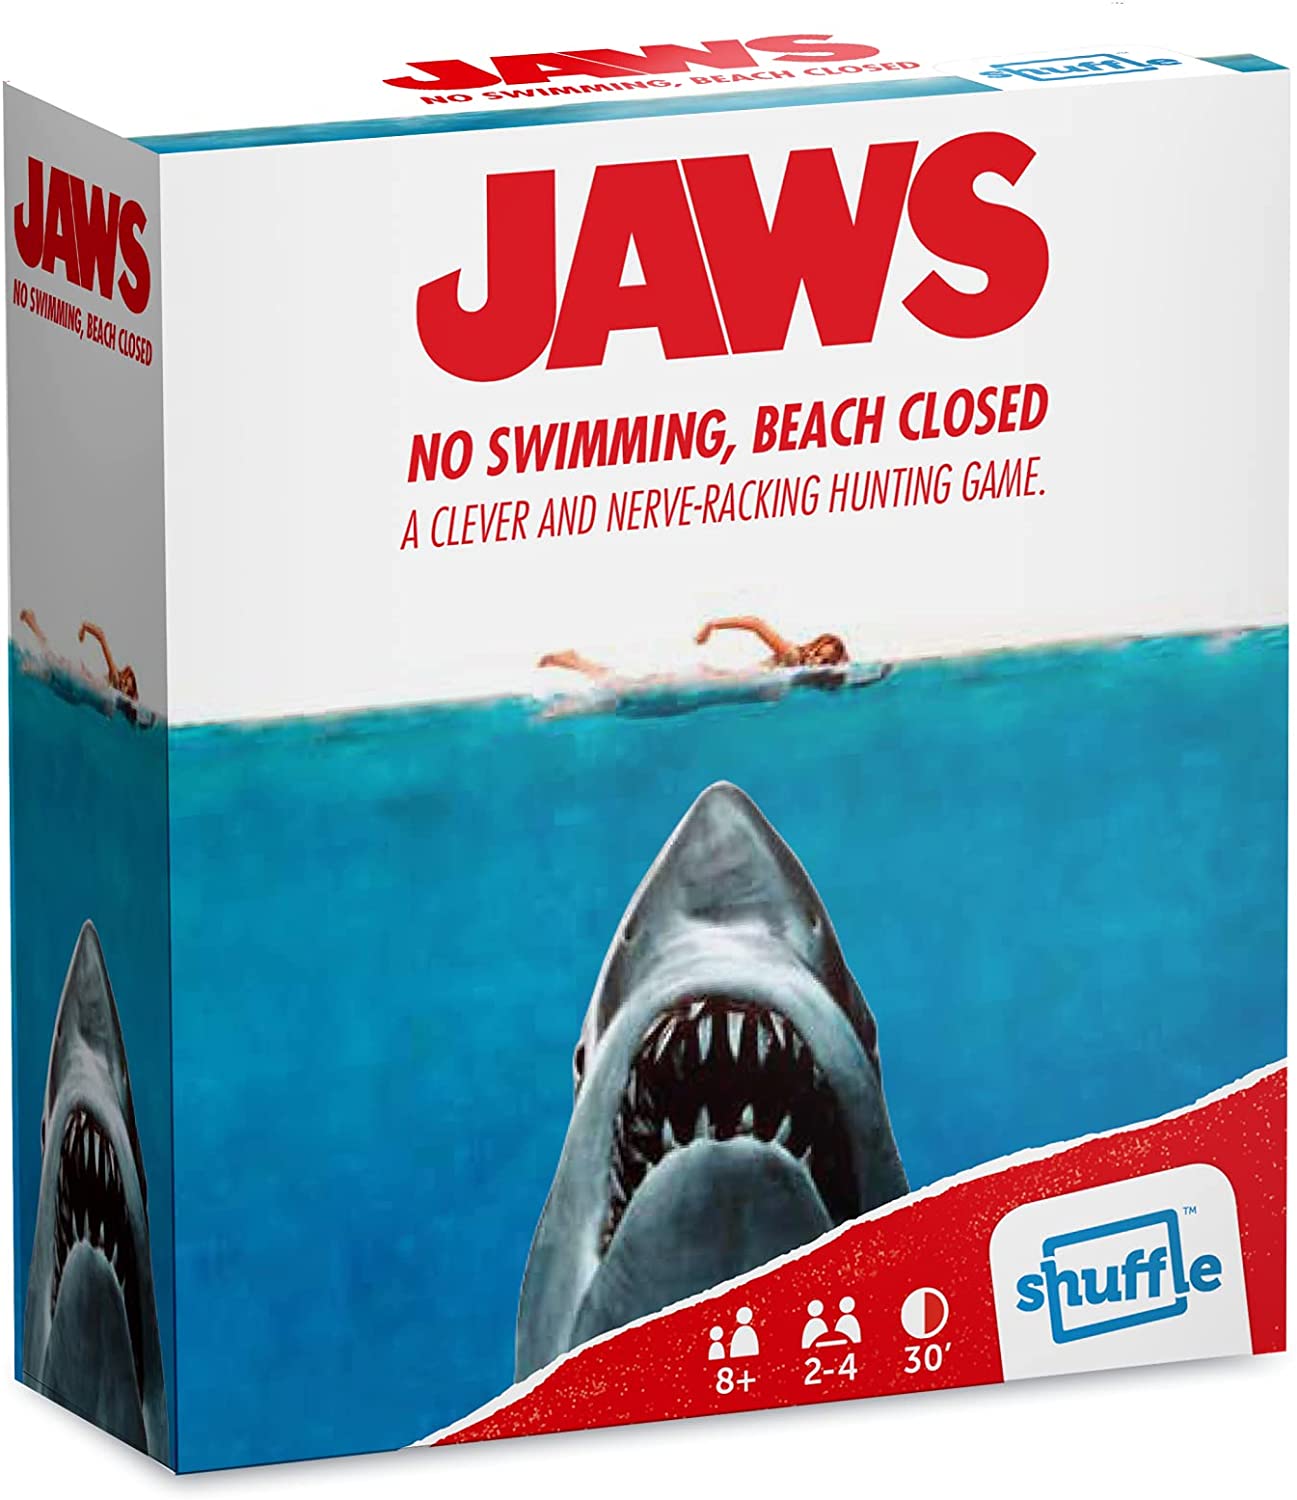 Jaws: No swimming, beach closed